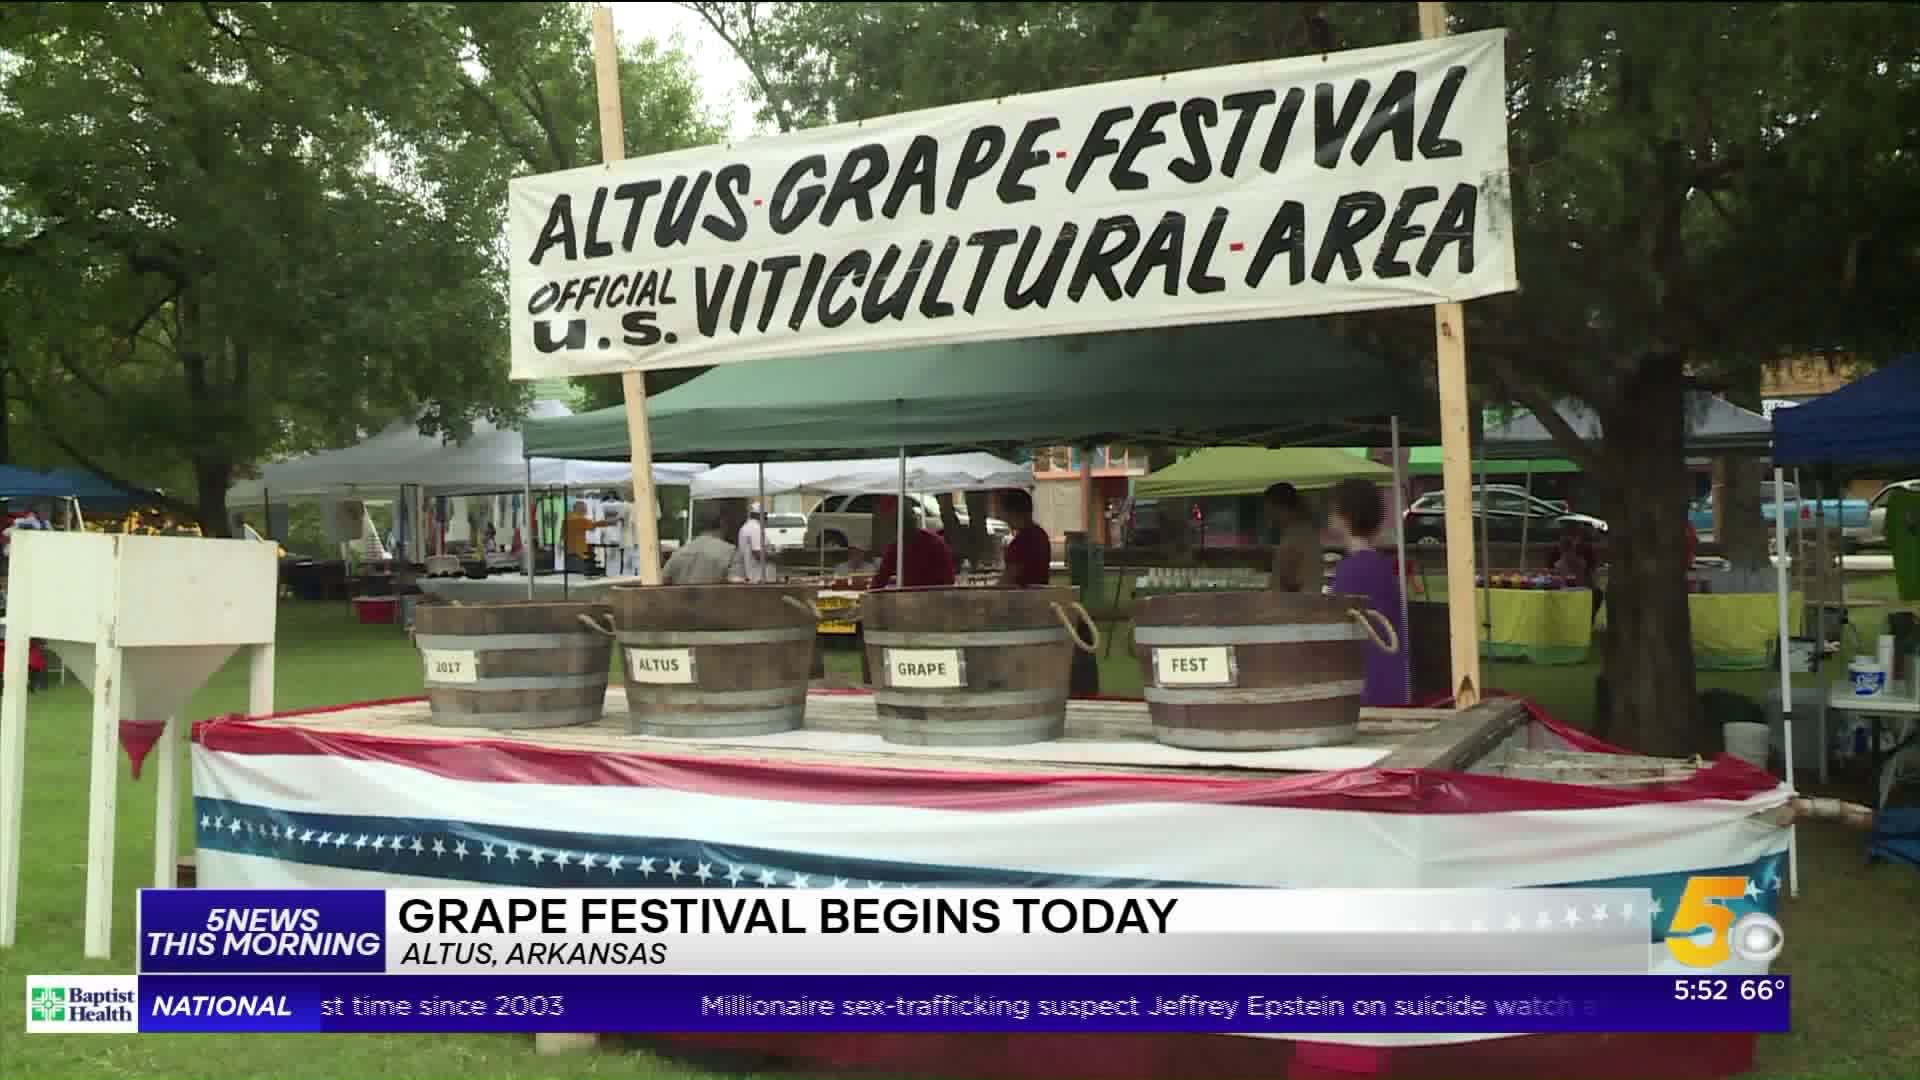 Altus Grape Fest Kicks Off Today; 5NEWS Morning Team To Take On ‘Media